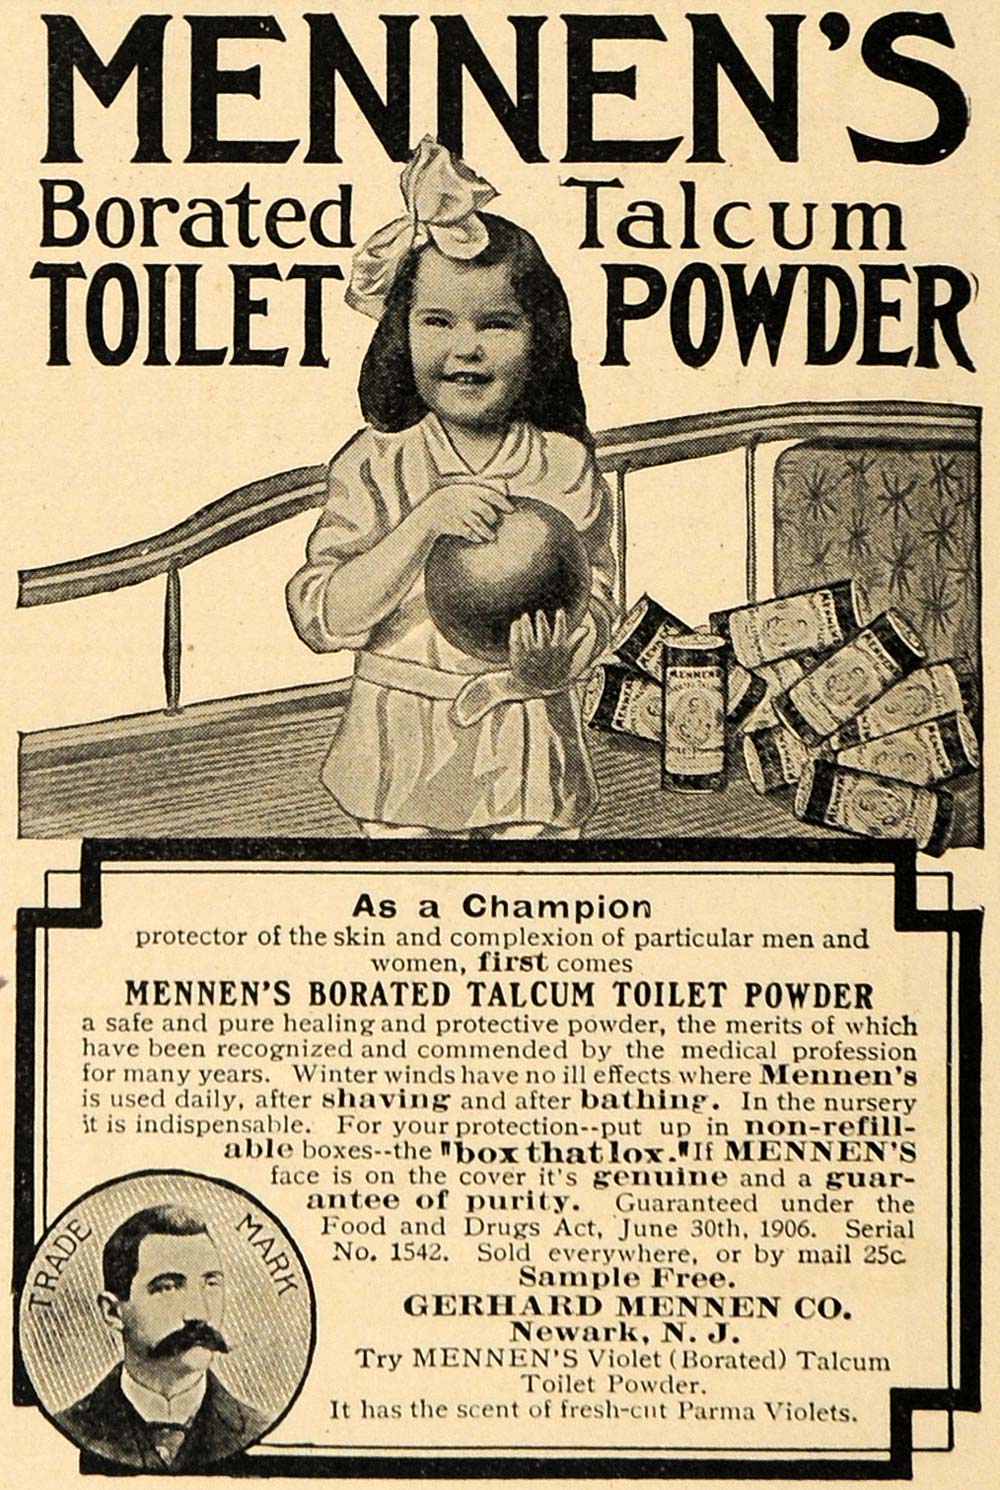 1908 Ad Gerhard Mennen Borated Talcum Toilet Powder - ORIGINAL ADVERTISING TW1